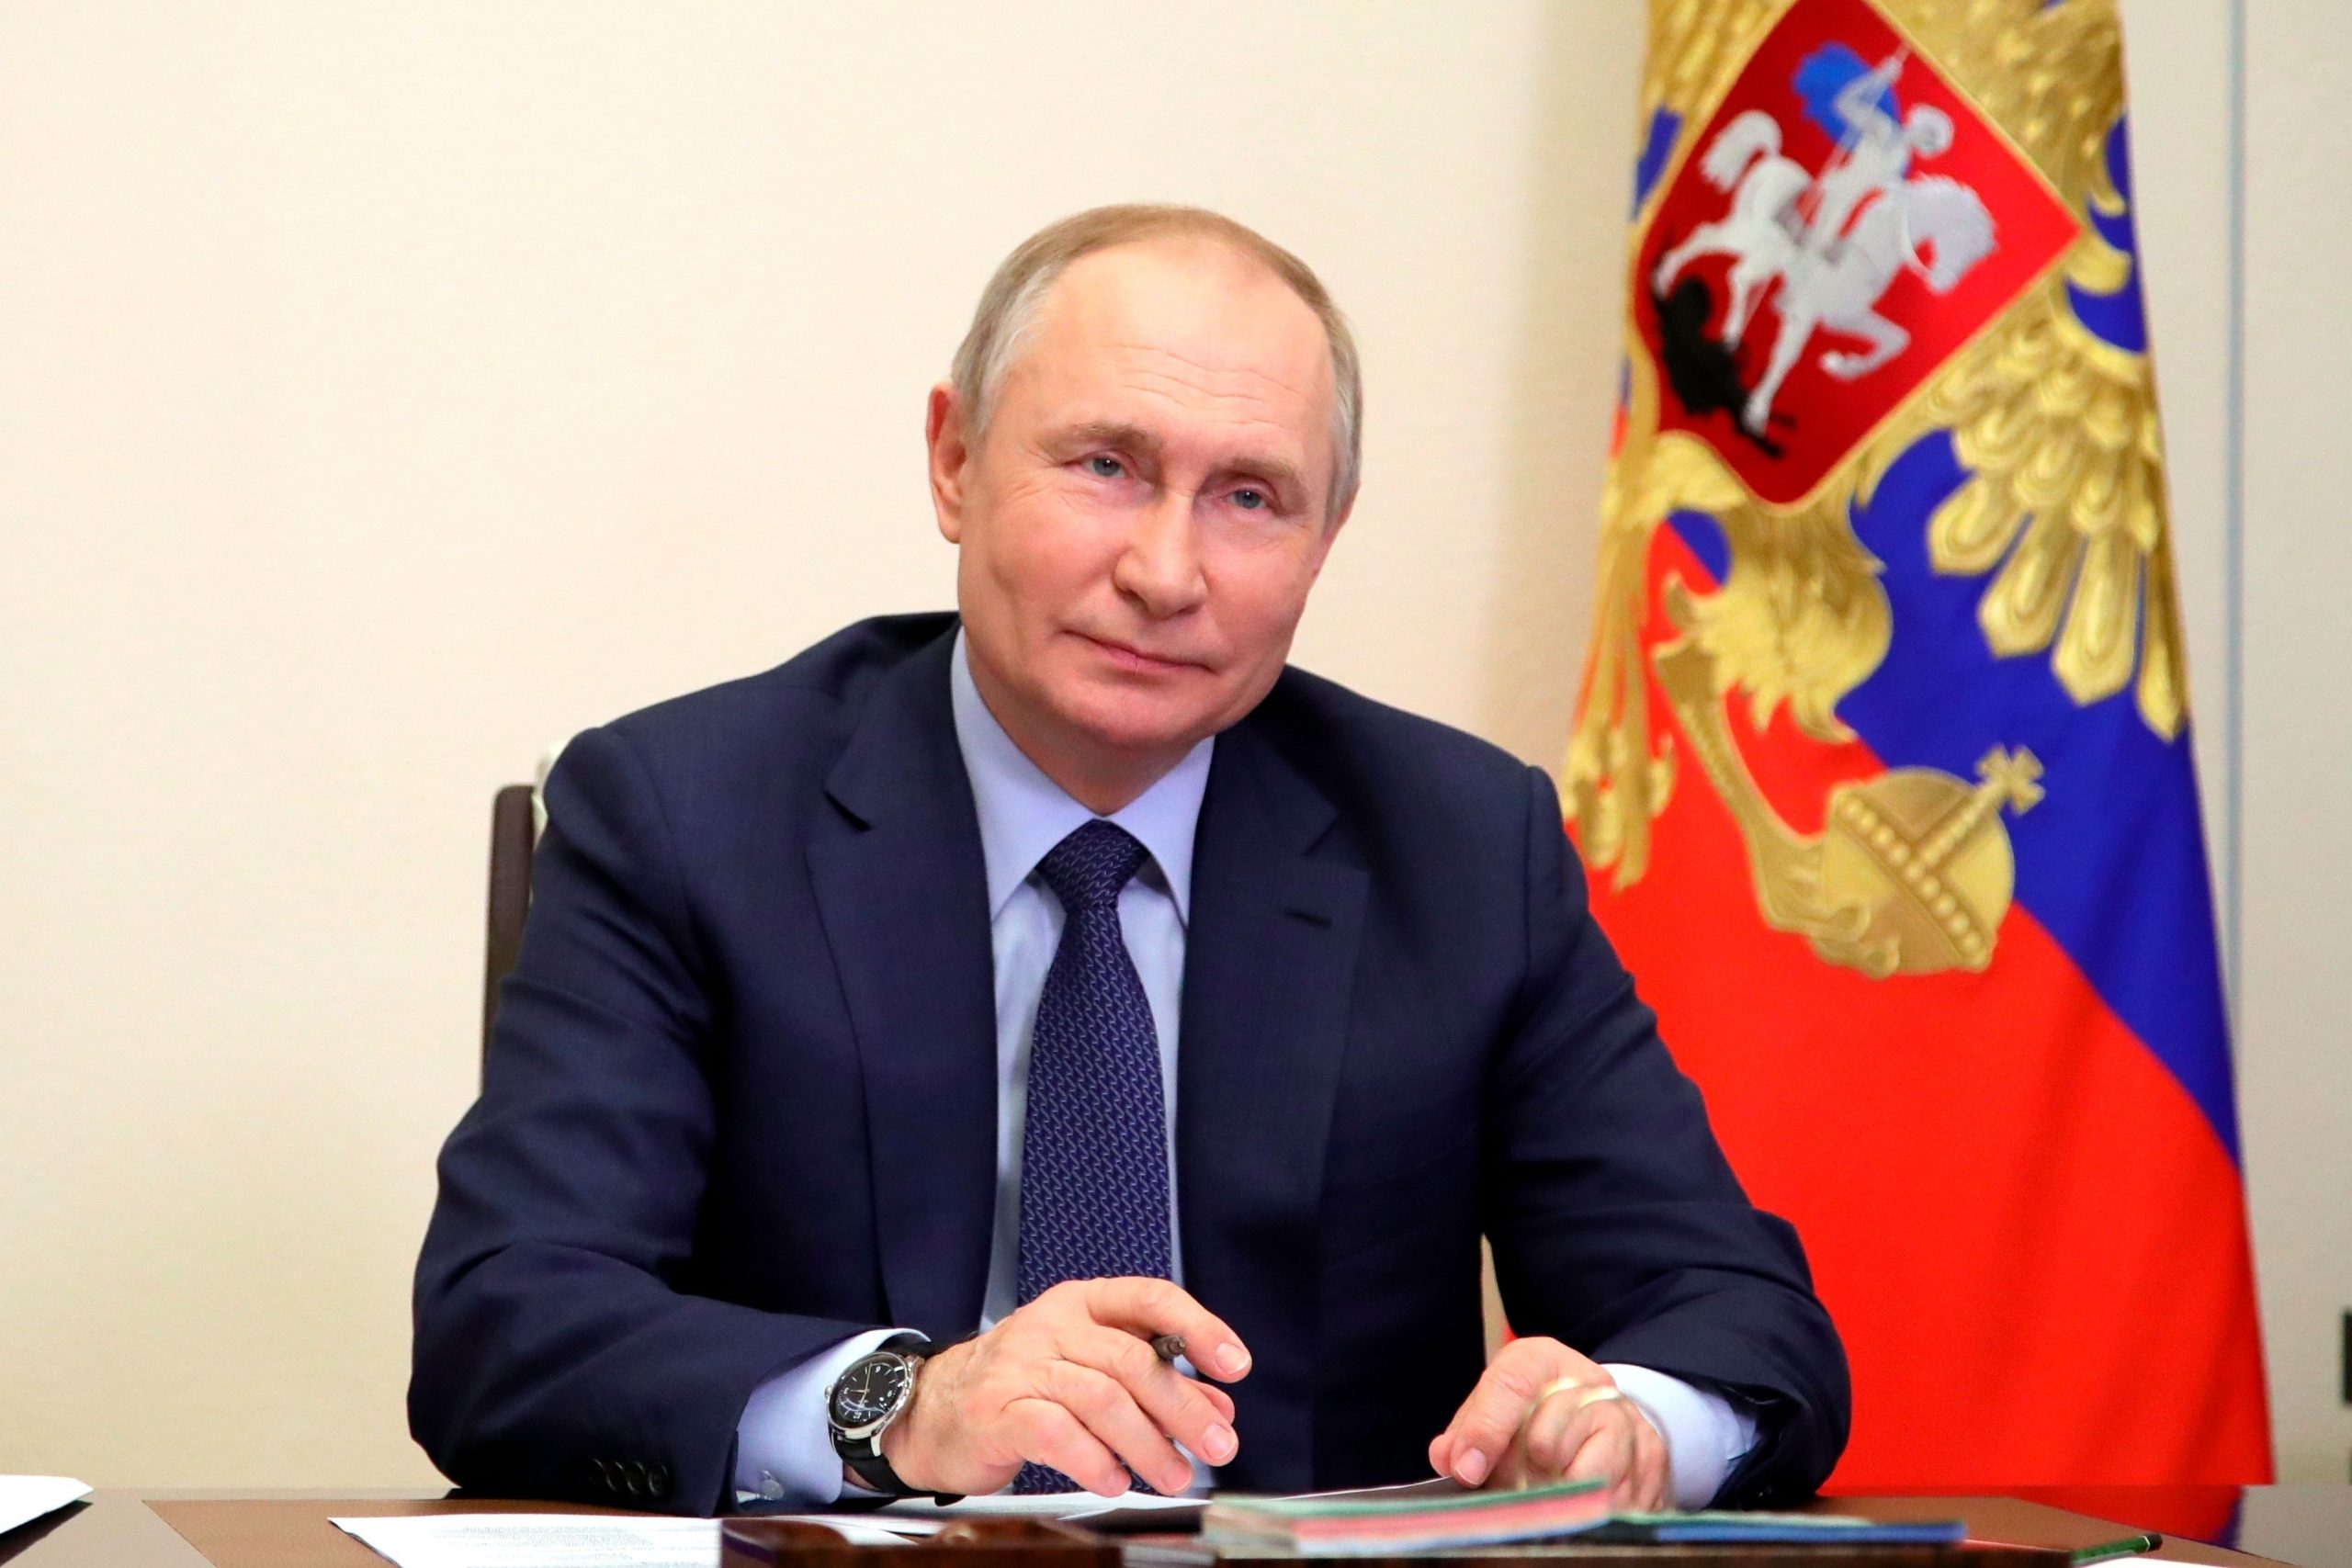 Vladimir Putin fighting cancer, transfers Russia’s power to ex-FSB chief: Report